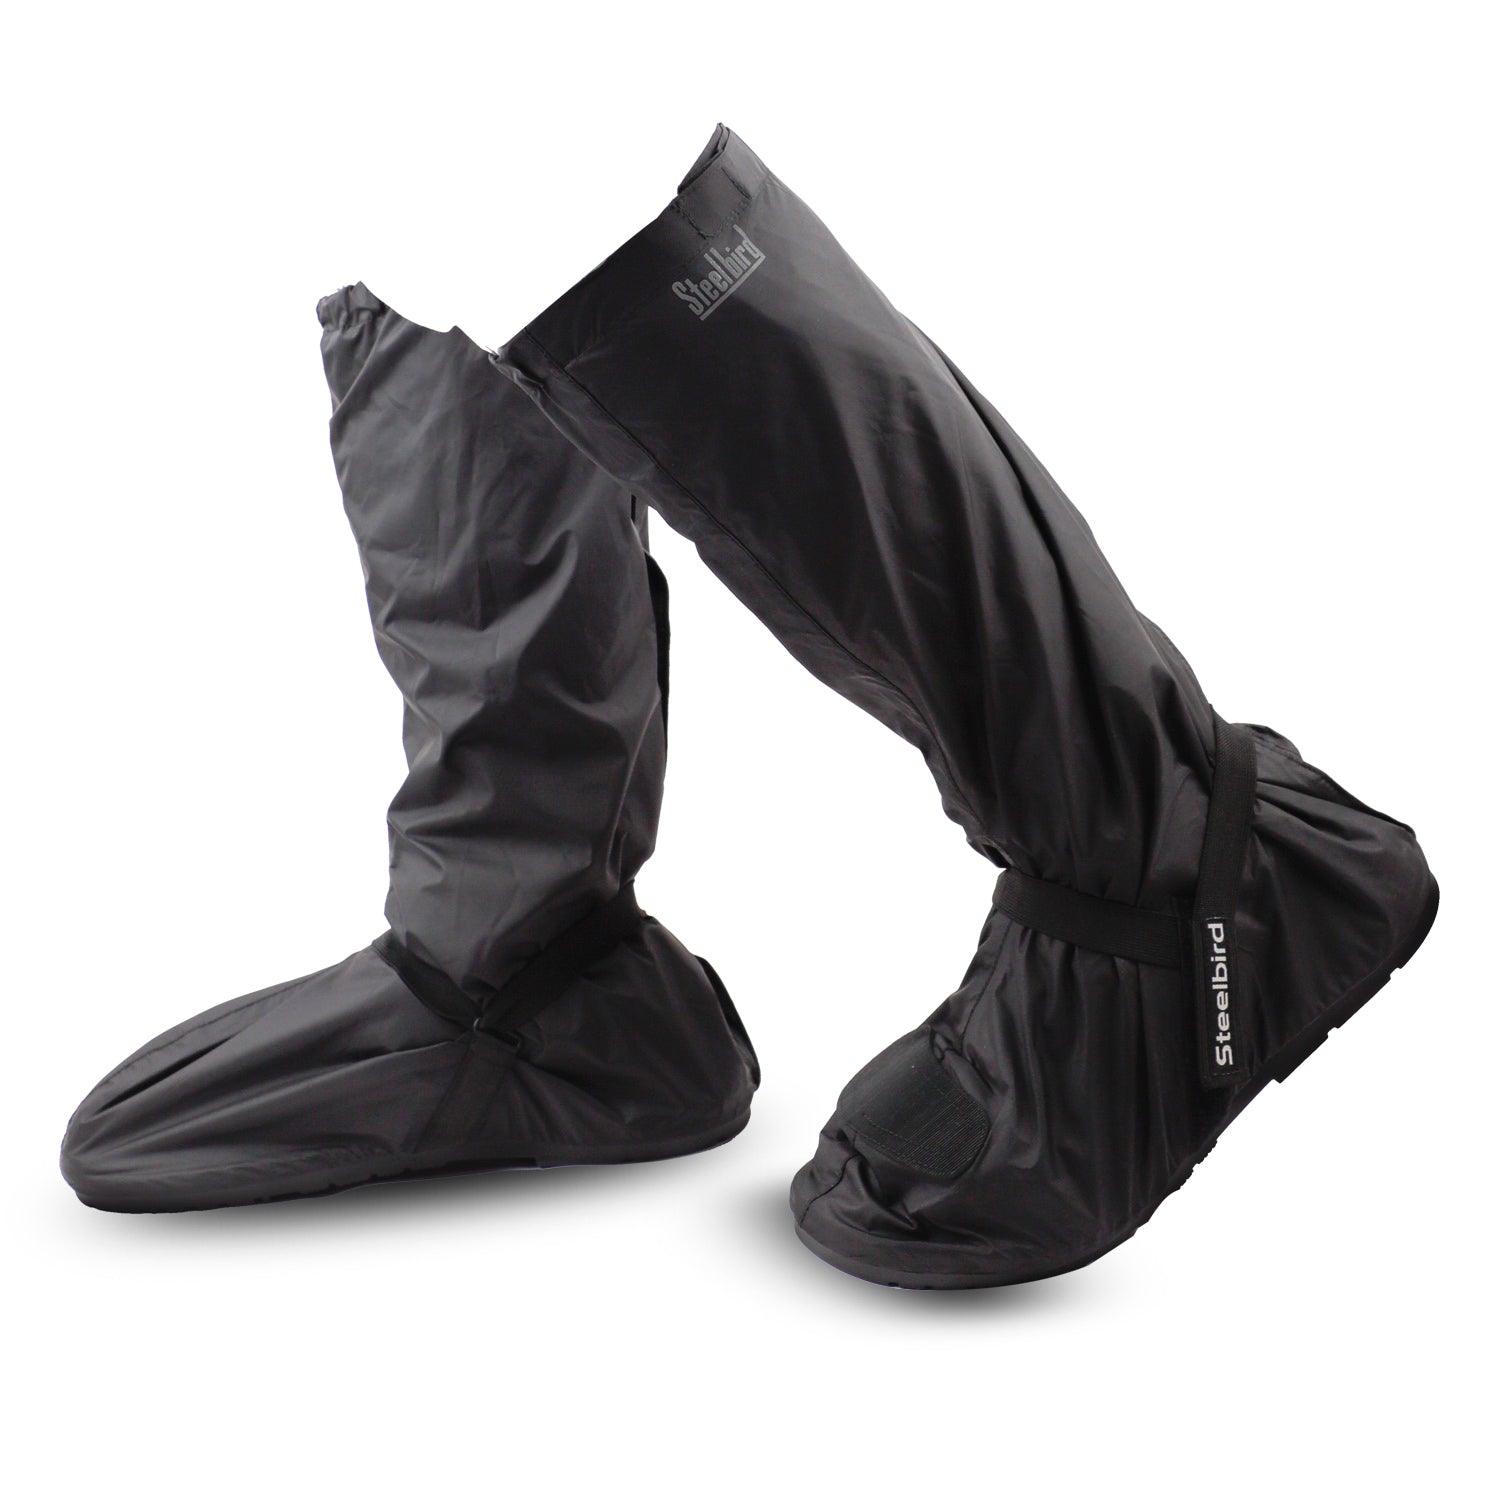 Steelbird Shoe Cover (Black)